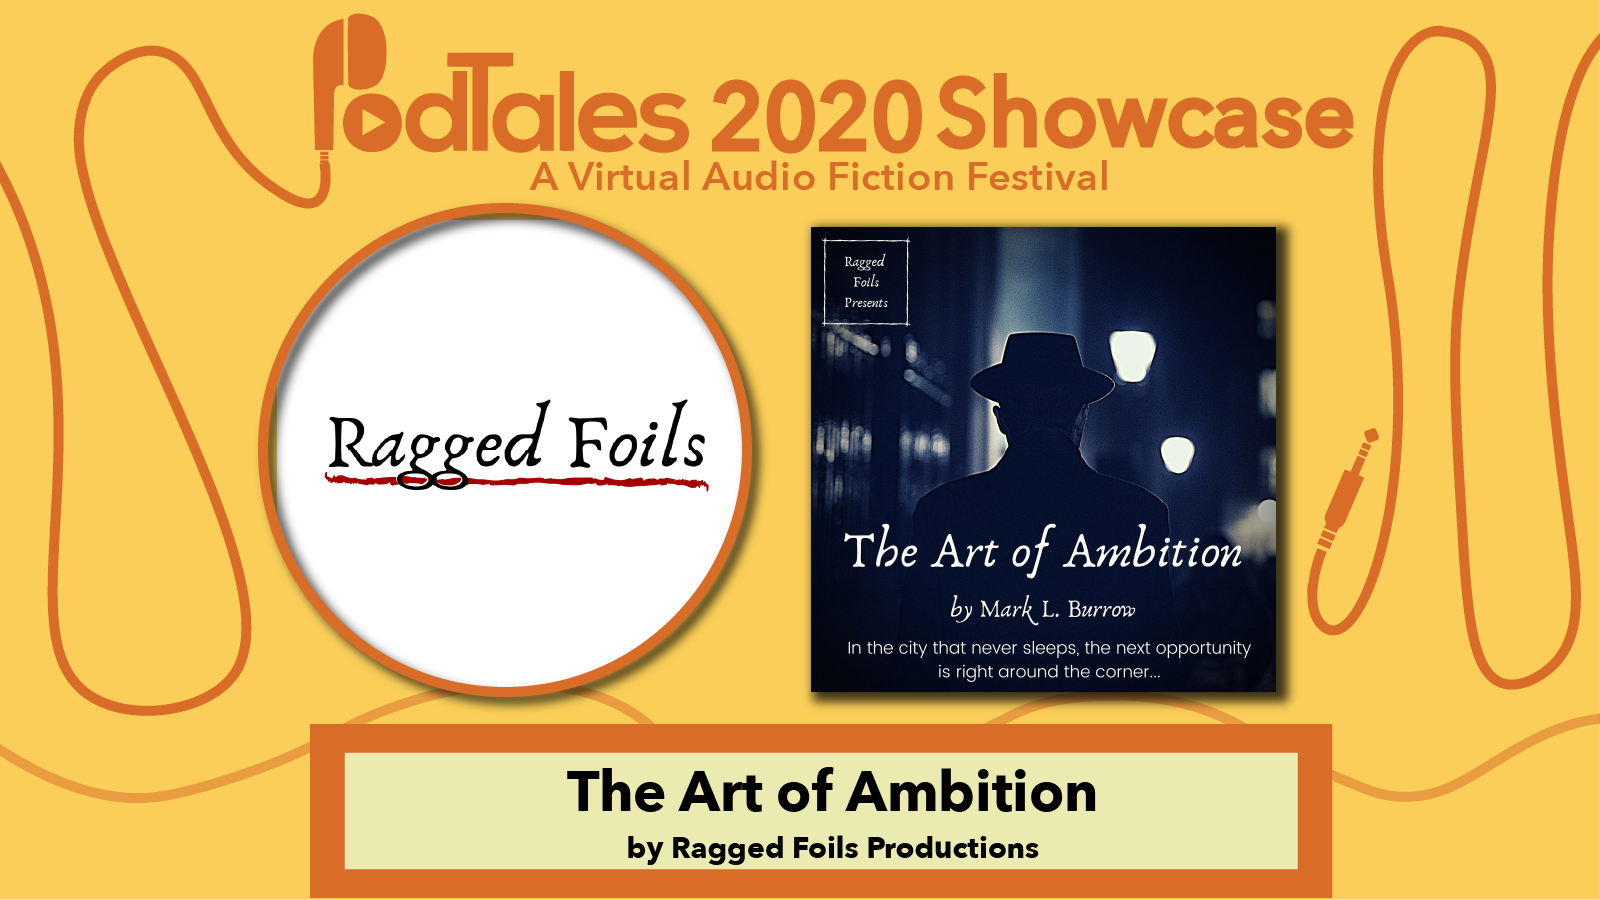 Text reading “PodTales 2020 Showcase: A Virtual Audio Fiction Festival”, Ragged Foils Production Logo, Show Art for The Art of Ambition, Text reading “The Art of Ambition by Ragged Foils Production”